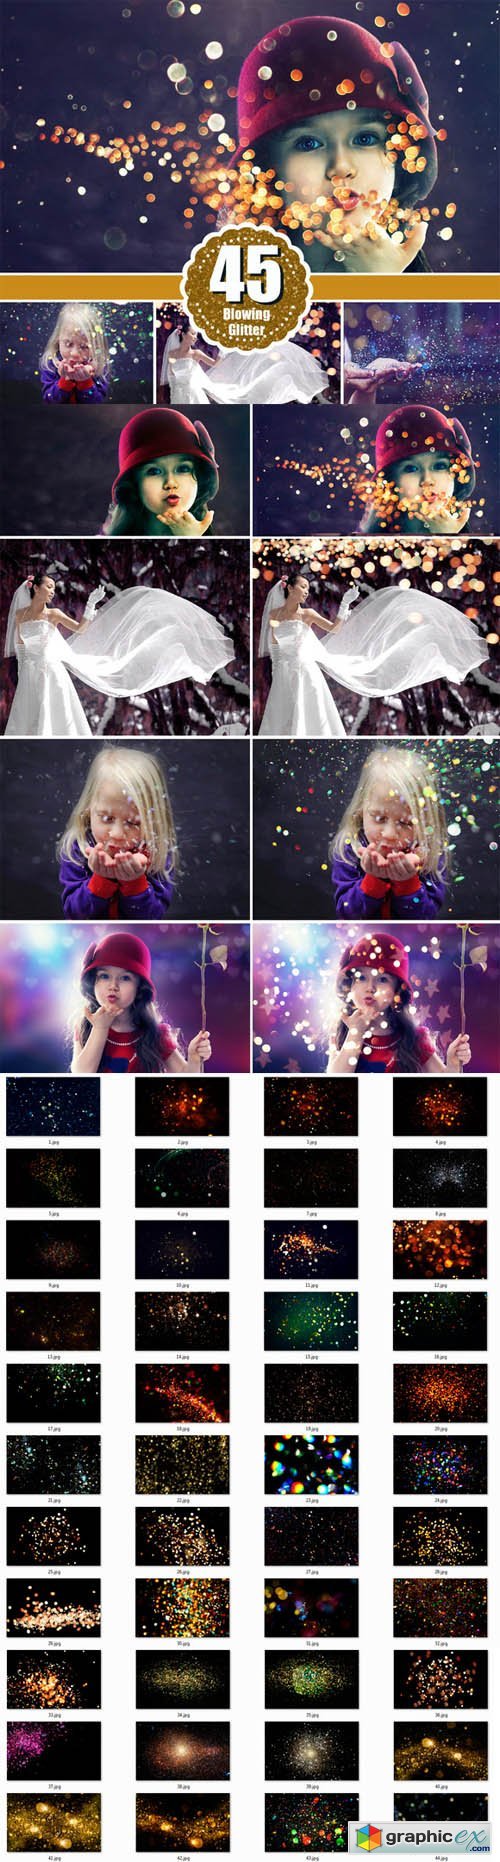 Blowing glitter photoshop overlays